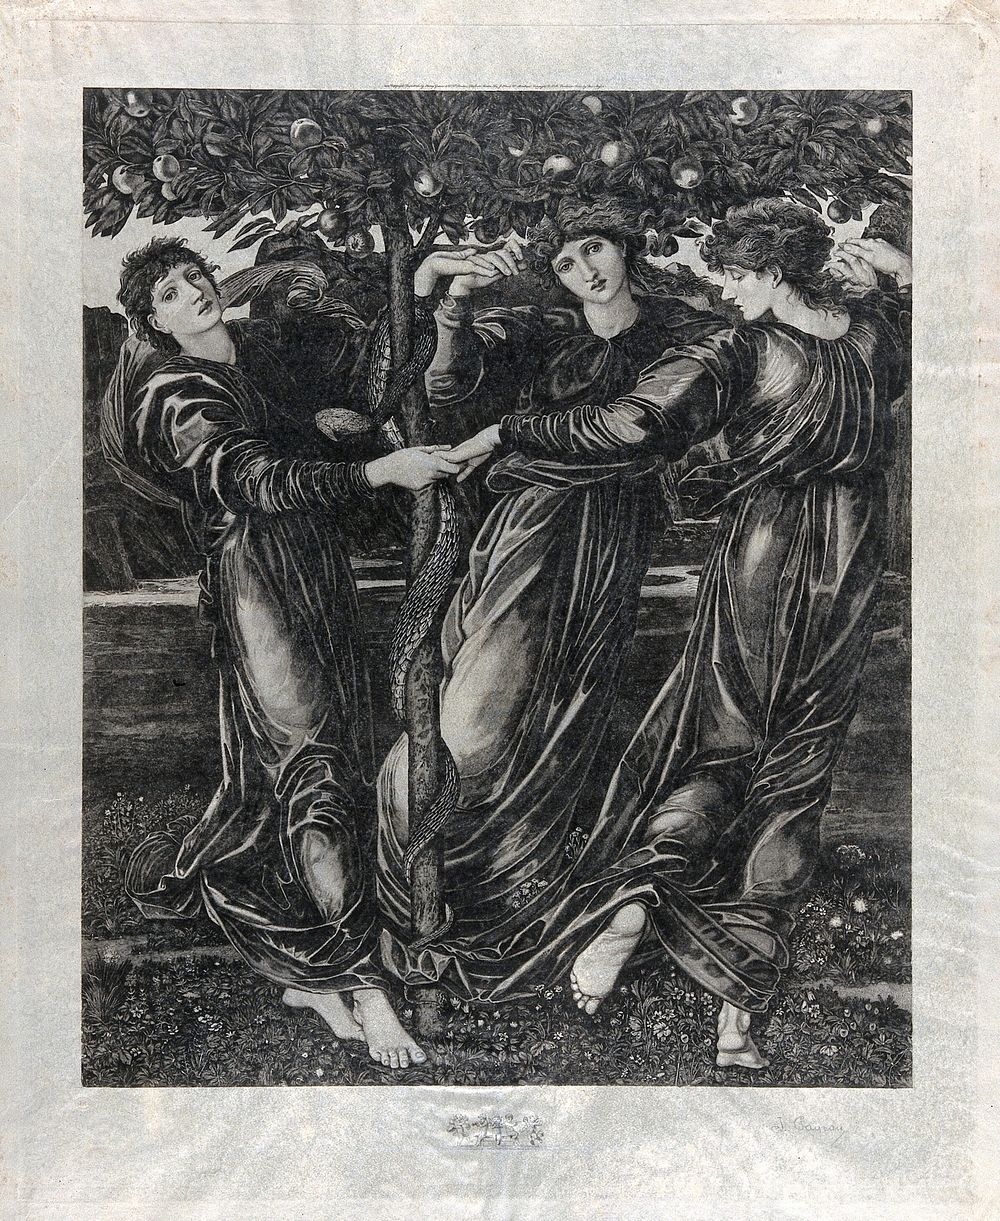 Three goddesses dance around the Tree of Knowledge. Engraving by J. Payrau, 1901, after E. Burne-Jones.